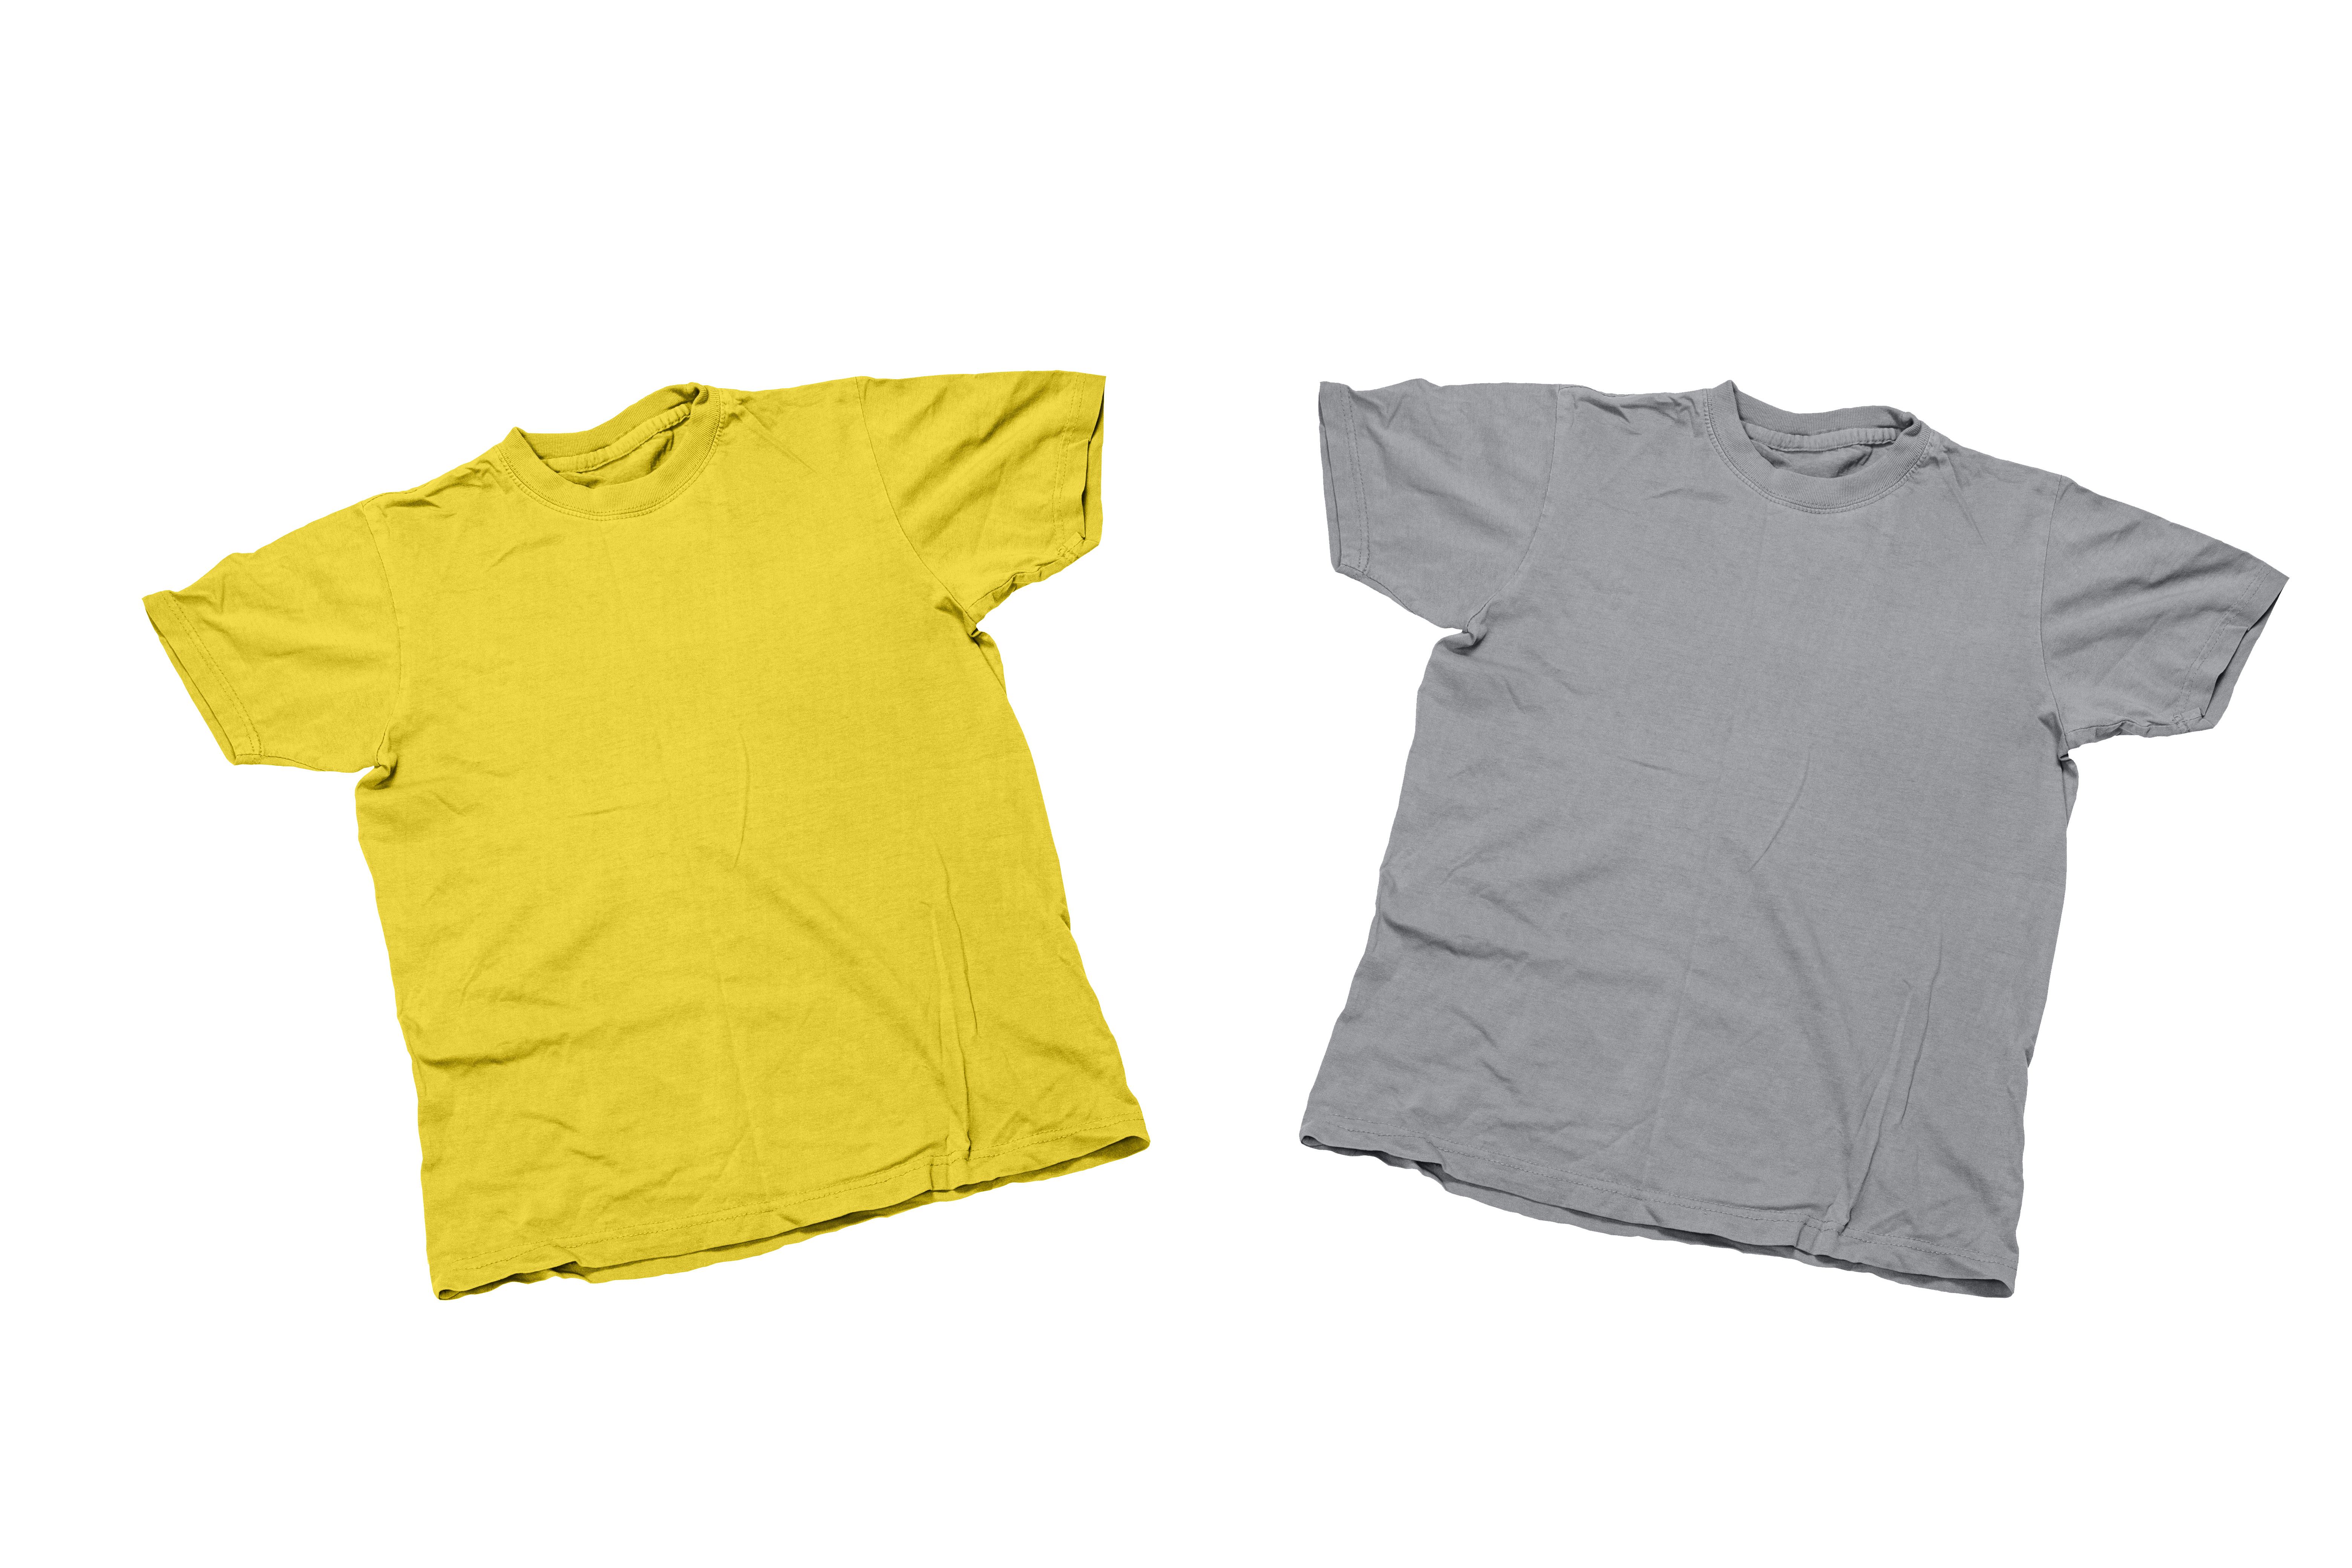 yellow-and-gray-shirts-shirtspace.jpg